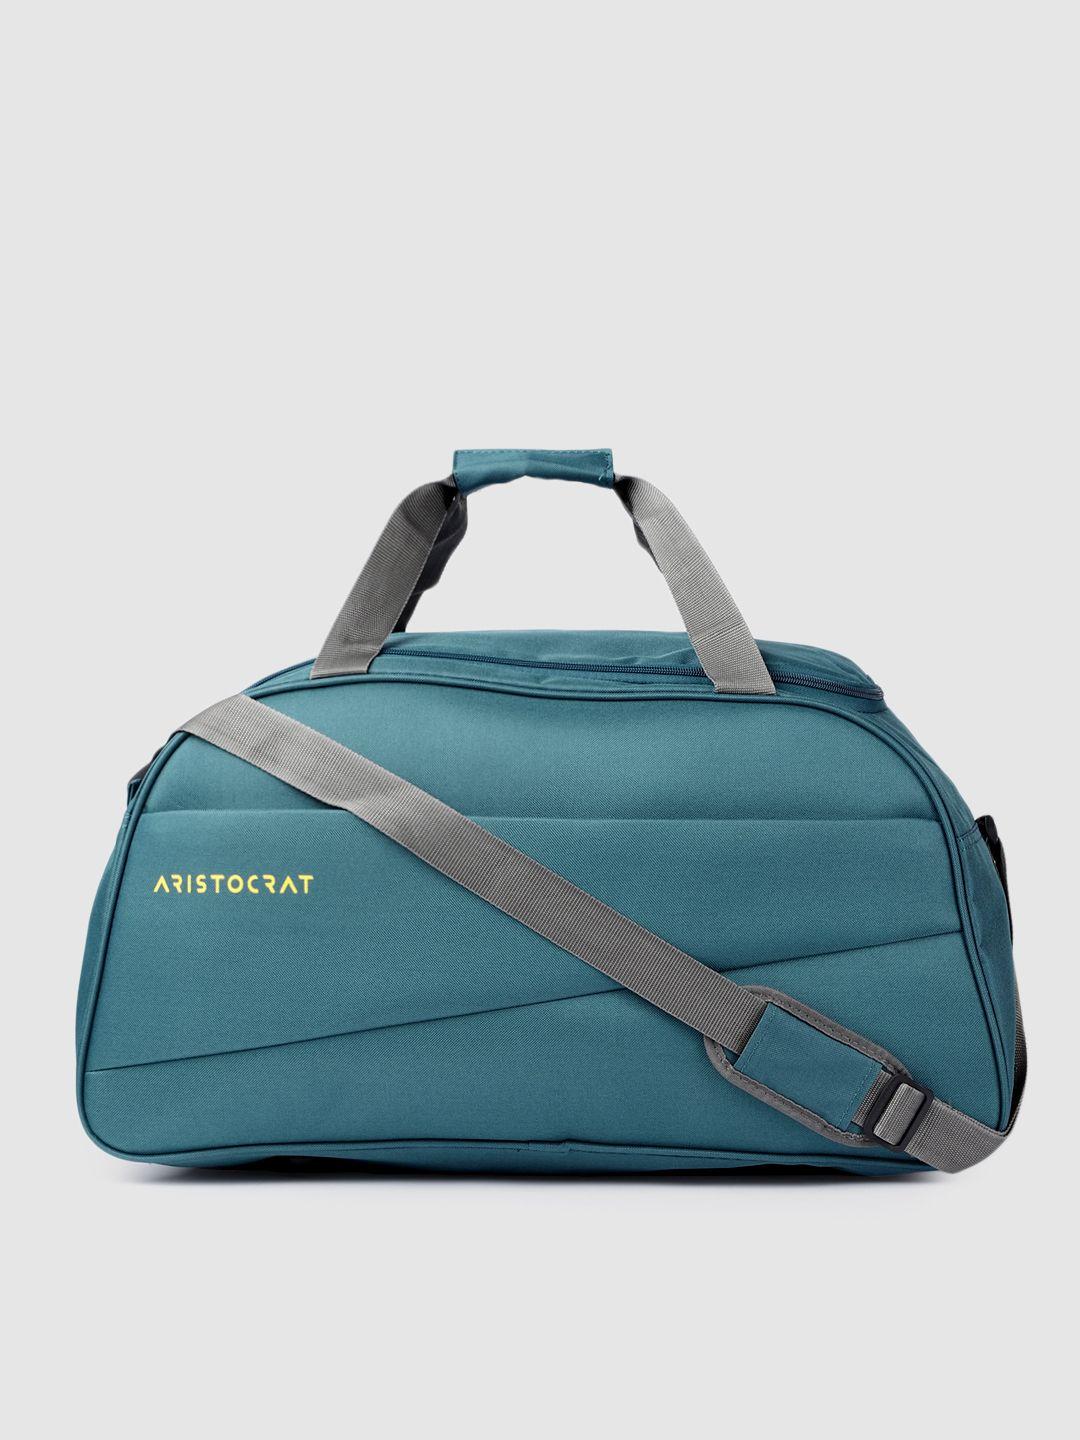 aristocrat-teal-blue-solid-medium-duffel-bag